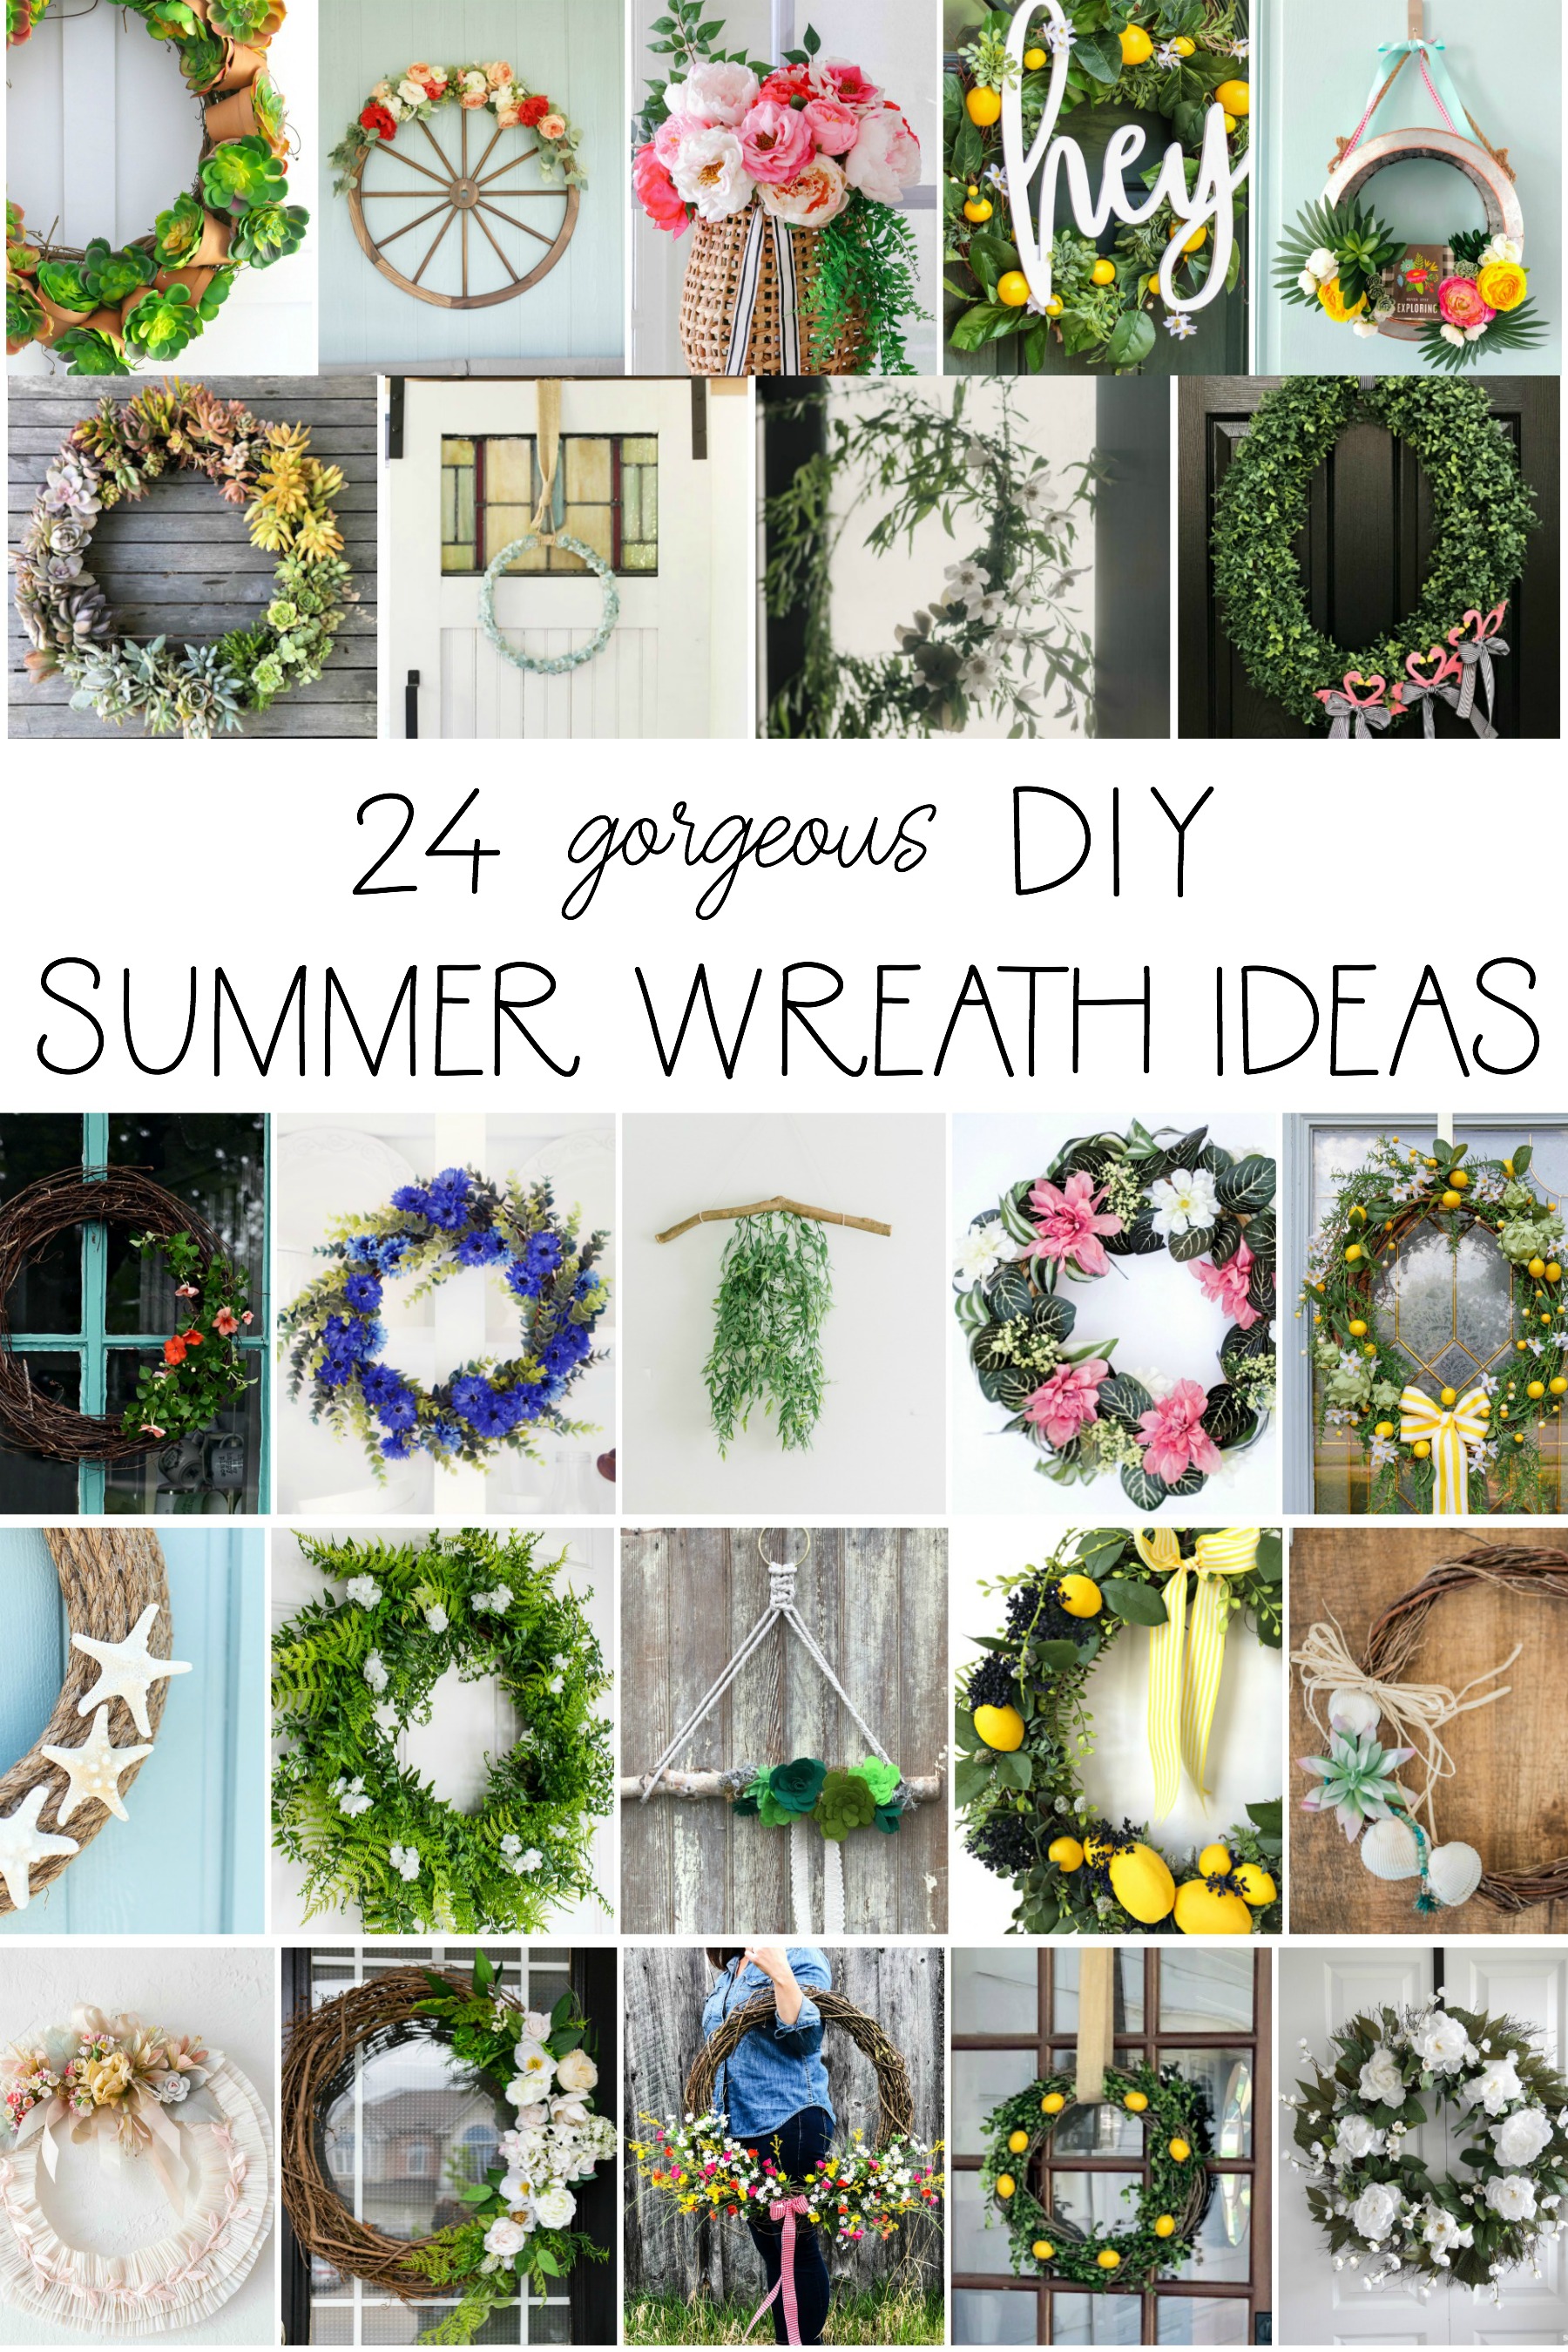 24 gorgeous DIY summer wreath ideas poster.